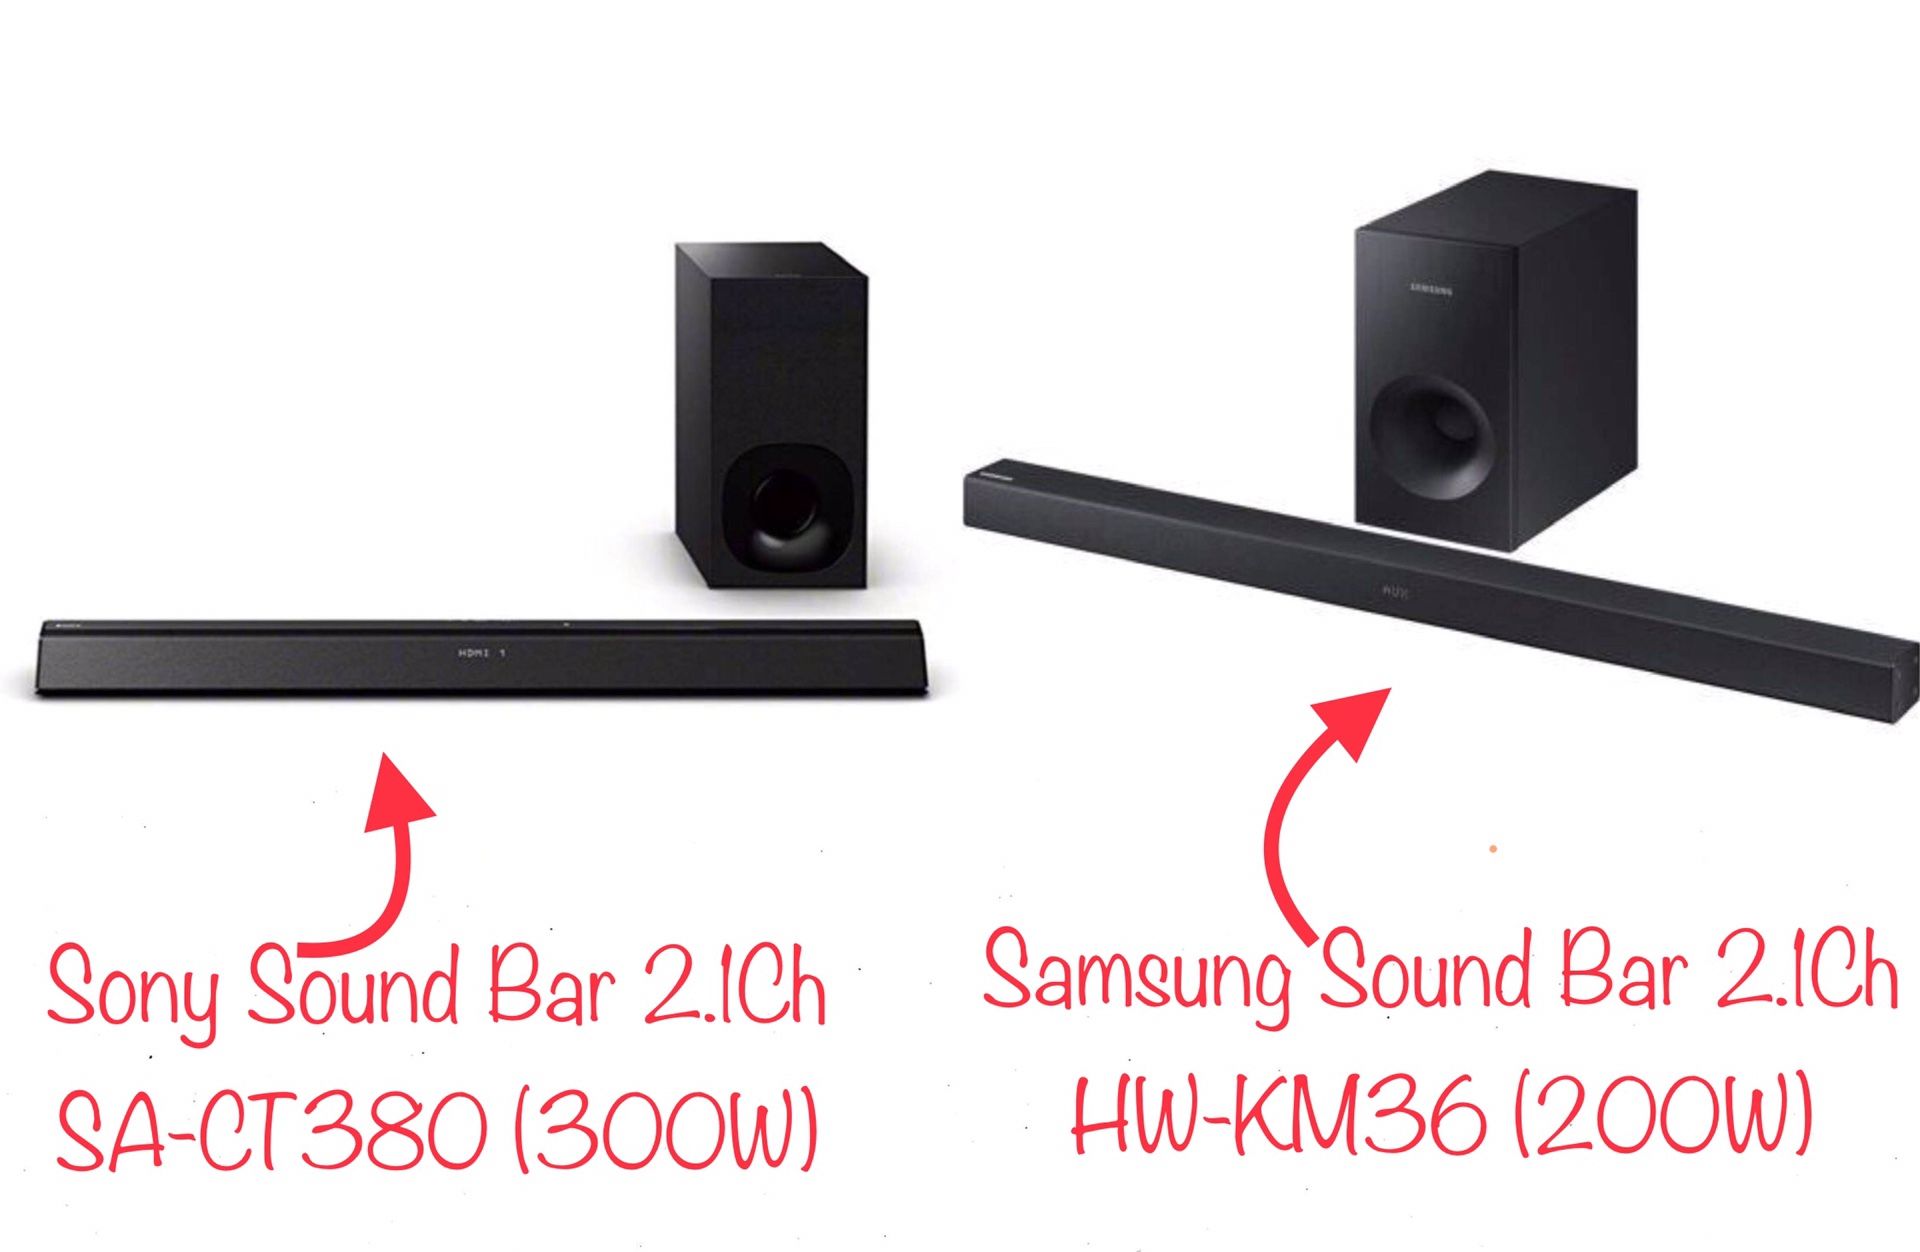 Sound Bars Audio Speakers Barras de Sonido Bocinas Parlantes LG Sony Samsung Vizio harman / kardon